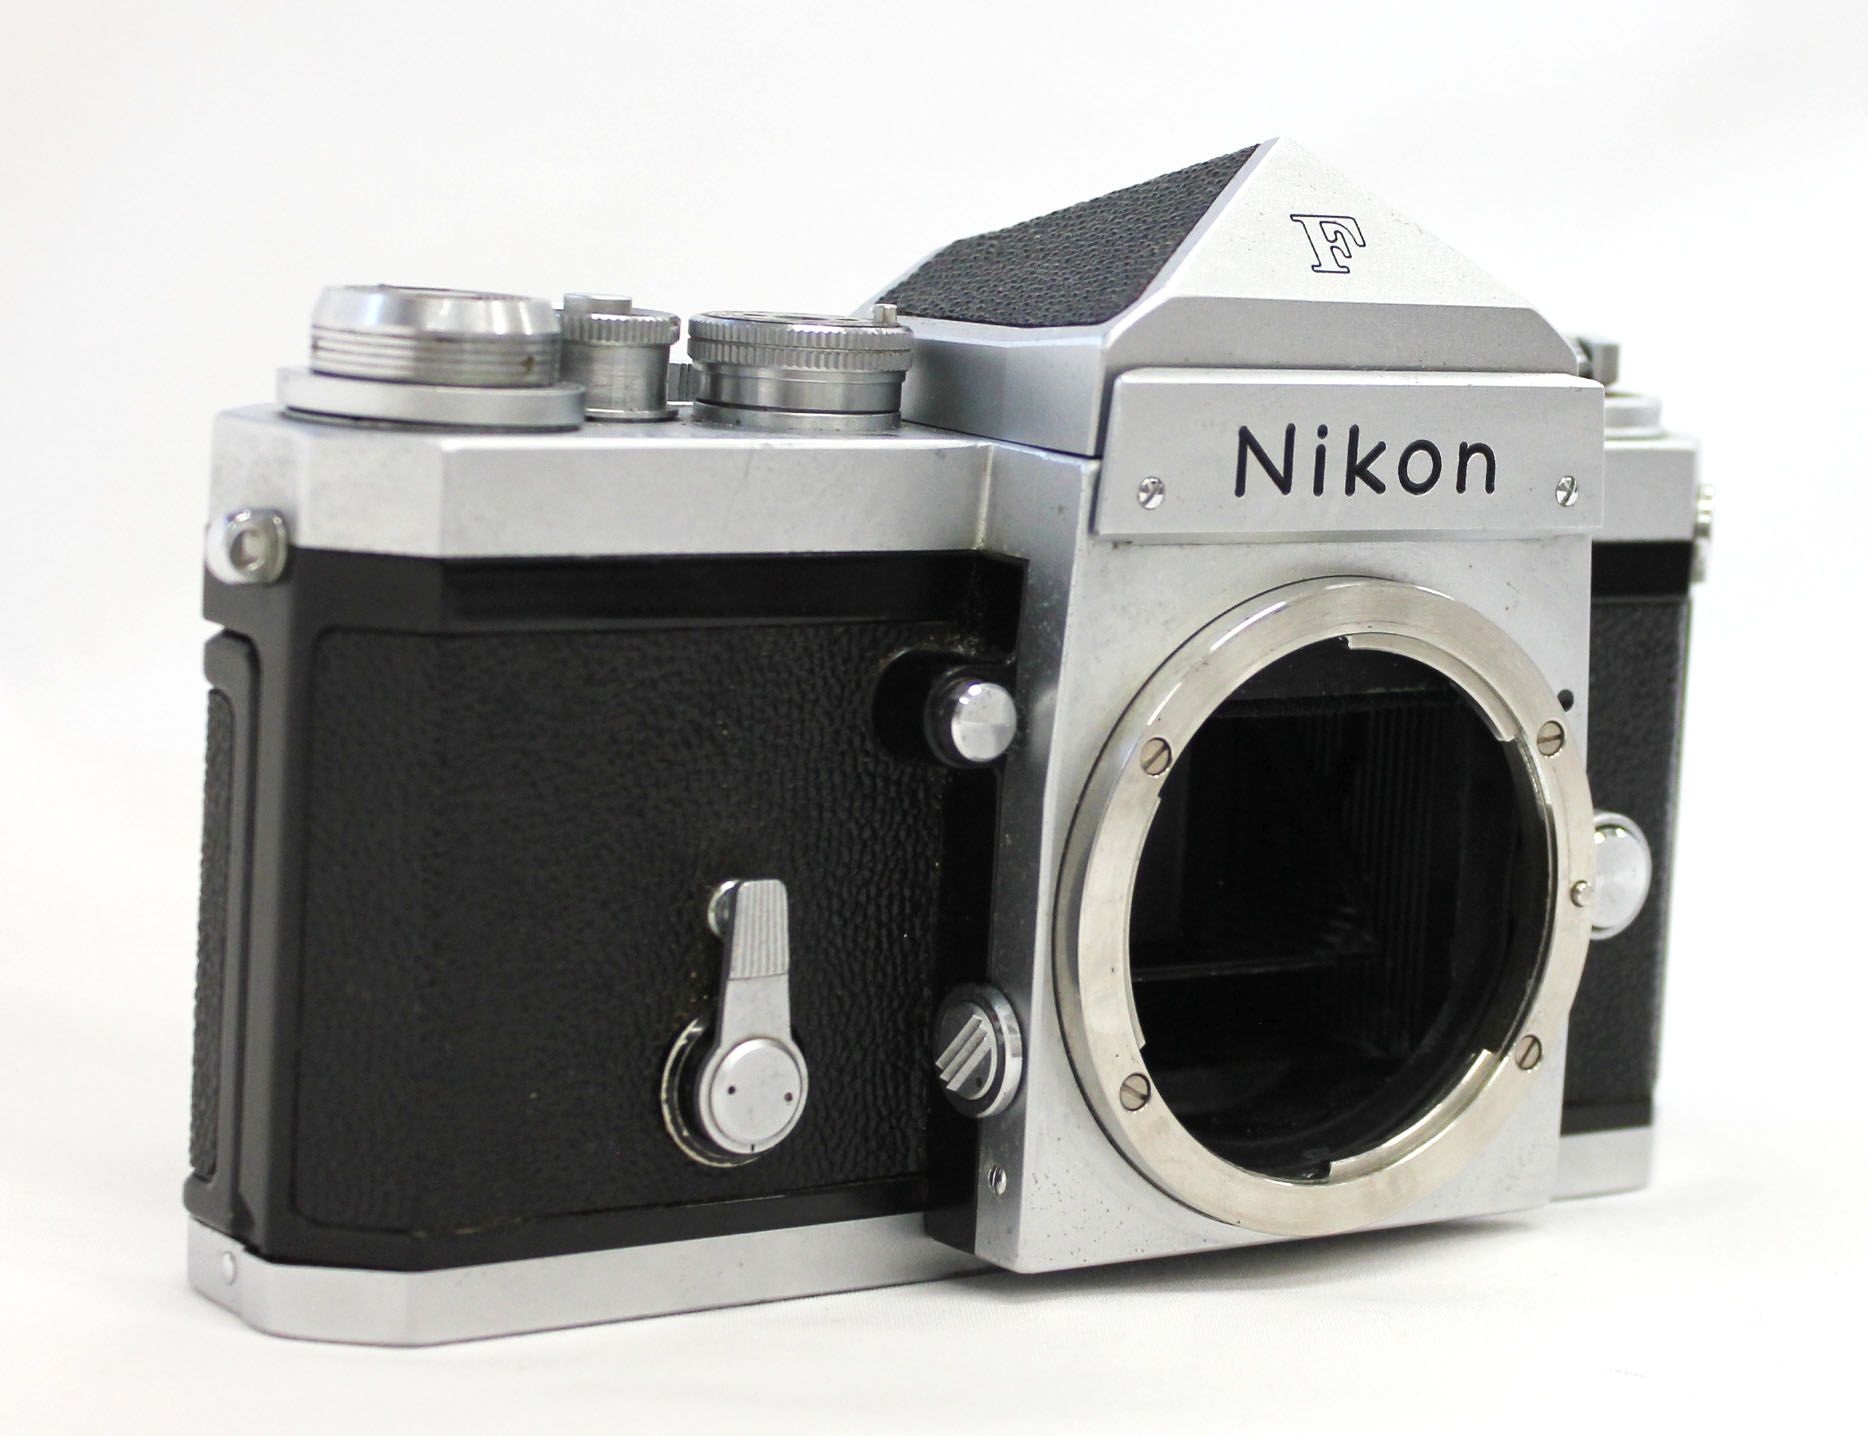  Nikon F Eye Level 35mm SLR Film Camera from Japan Photo 1